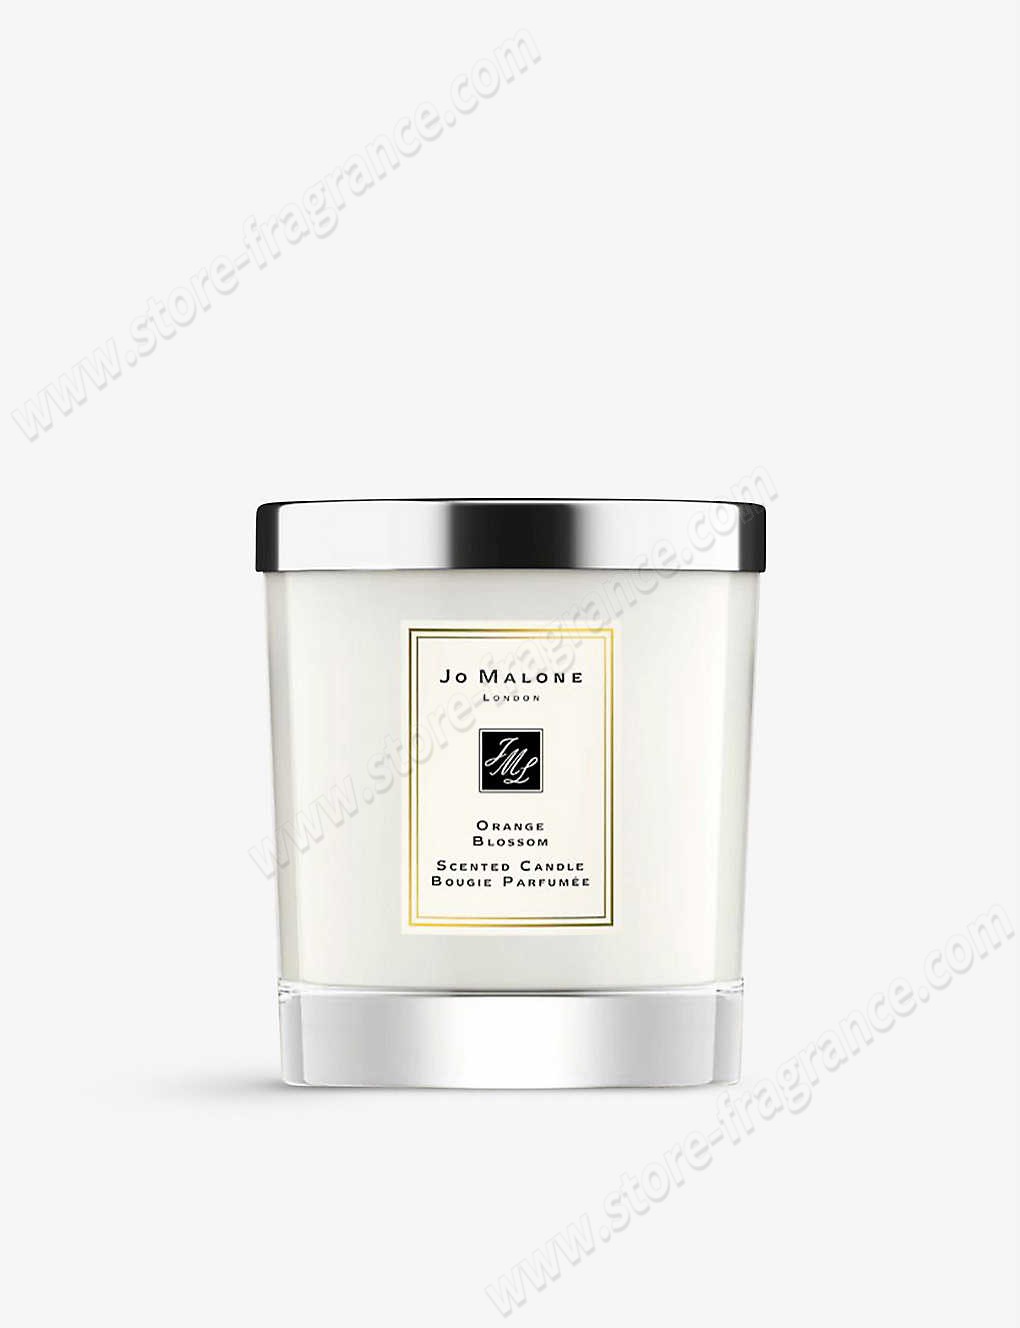 JO MALONE LONDON/Orange Blossom home candle 200g ✿ Discount Store - -0